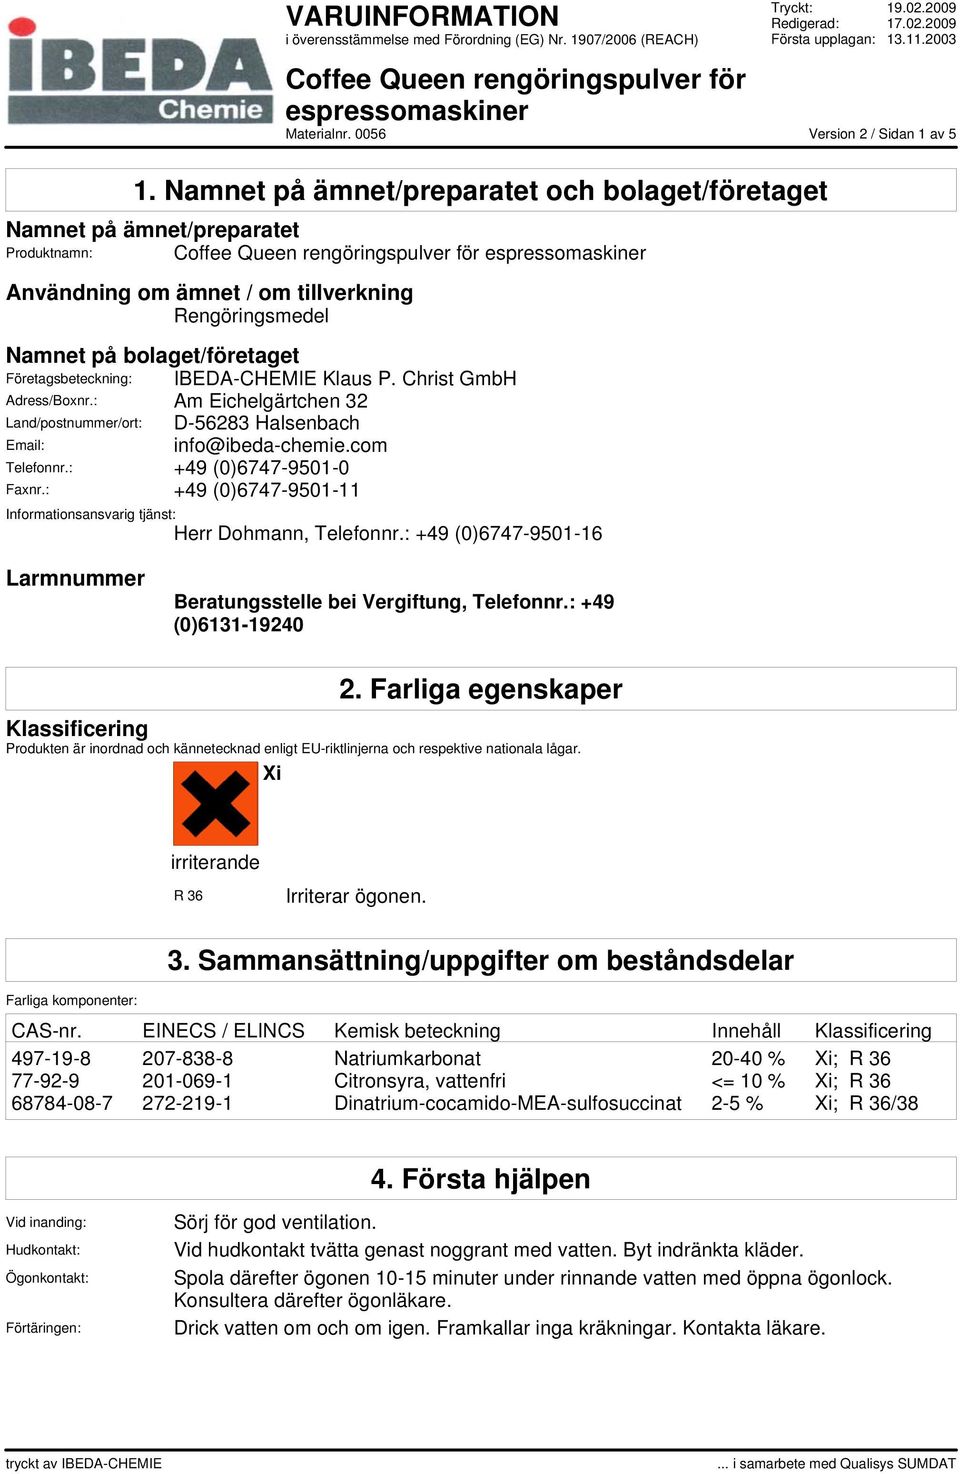 IBEDA-CHEMIE Klaus P. Christ GmbH Adress/Boxnr.: Am Eichelgärtchen 32 Land/postnummer/ort: D-56283 Halsenbach Email: info@ibeda-chemie.com Telefonnr.: +49 (0)6747-9501-0 Faxnr.